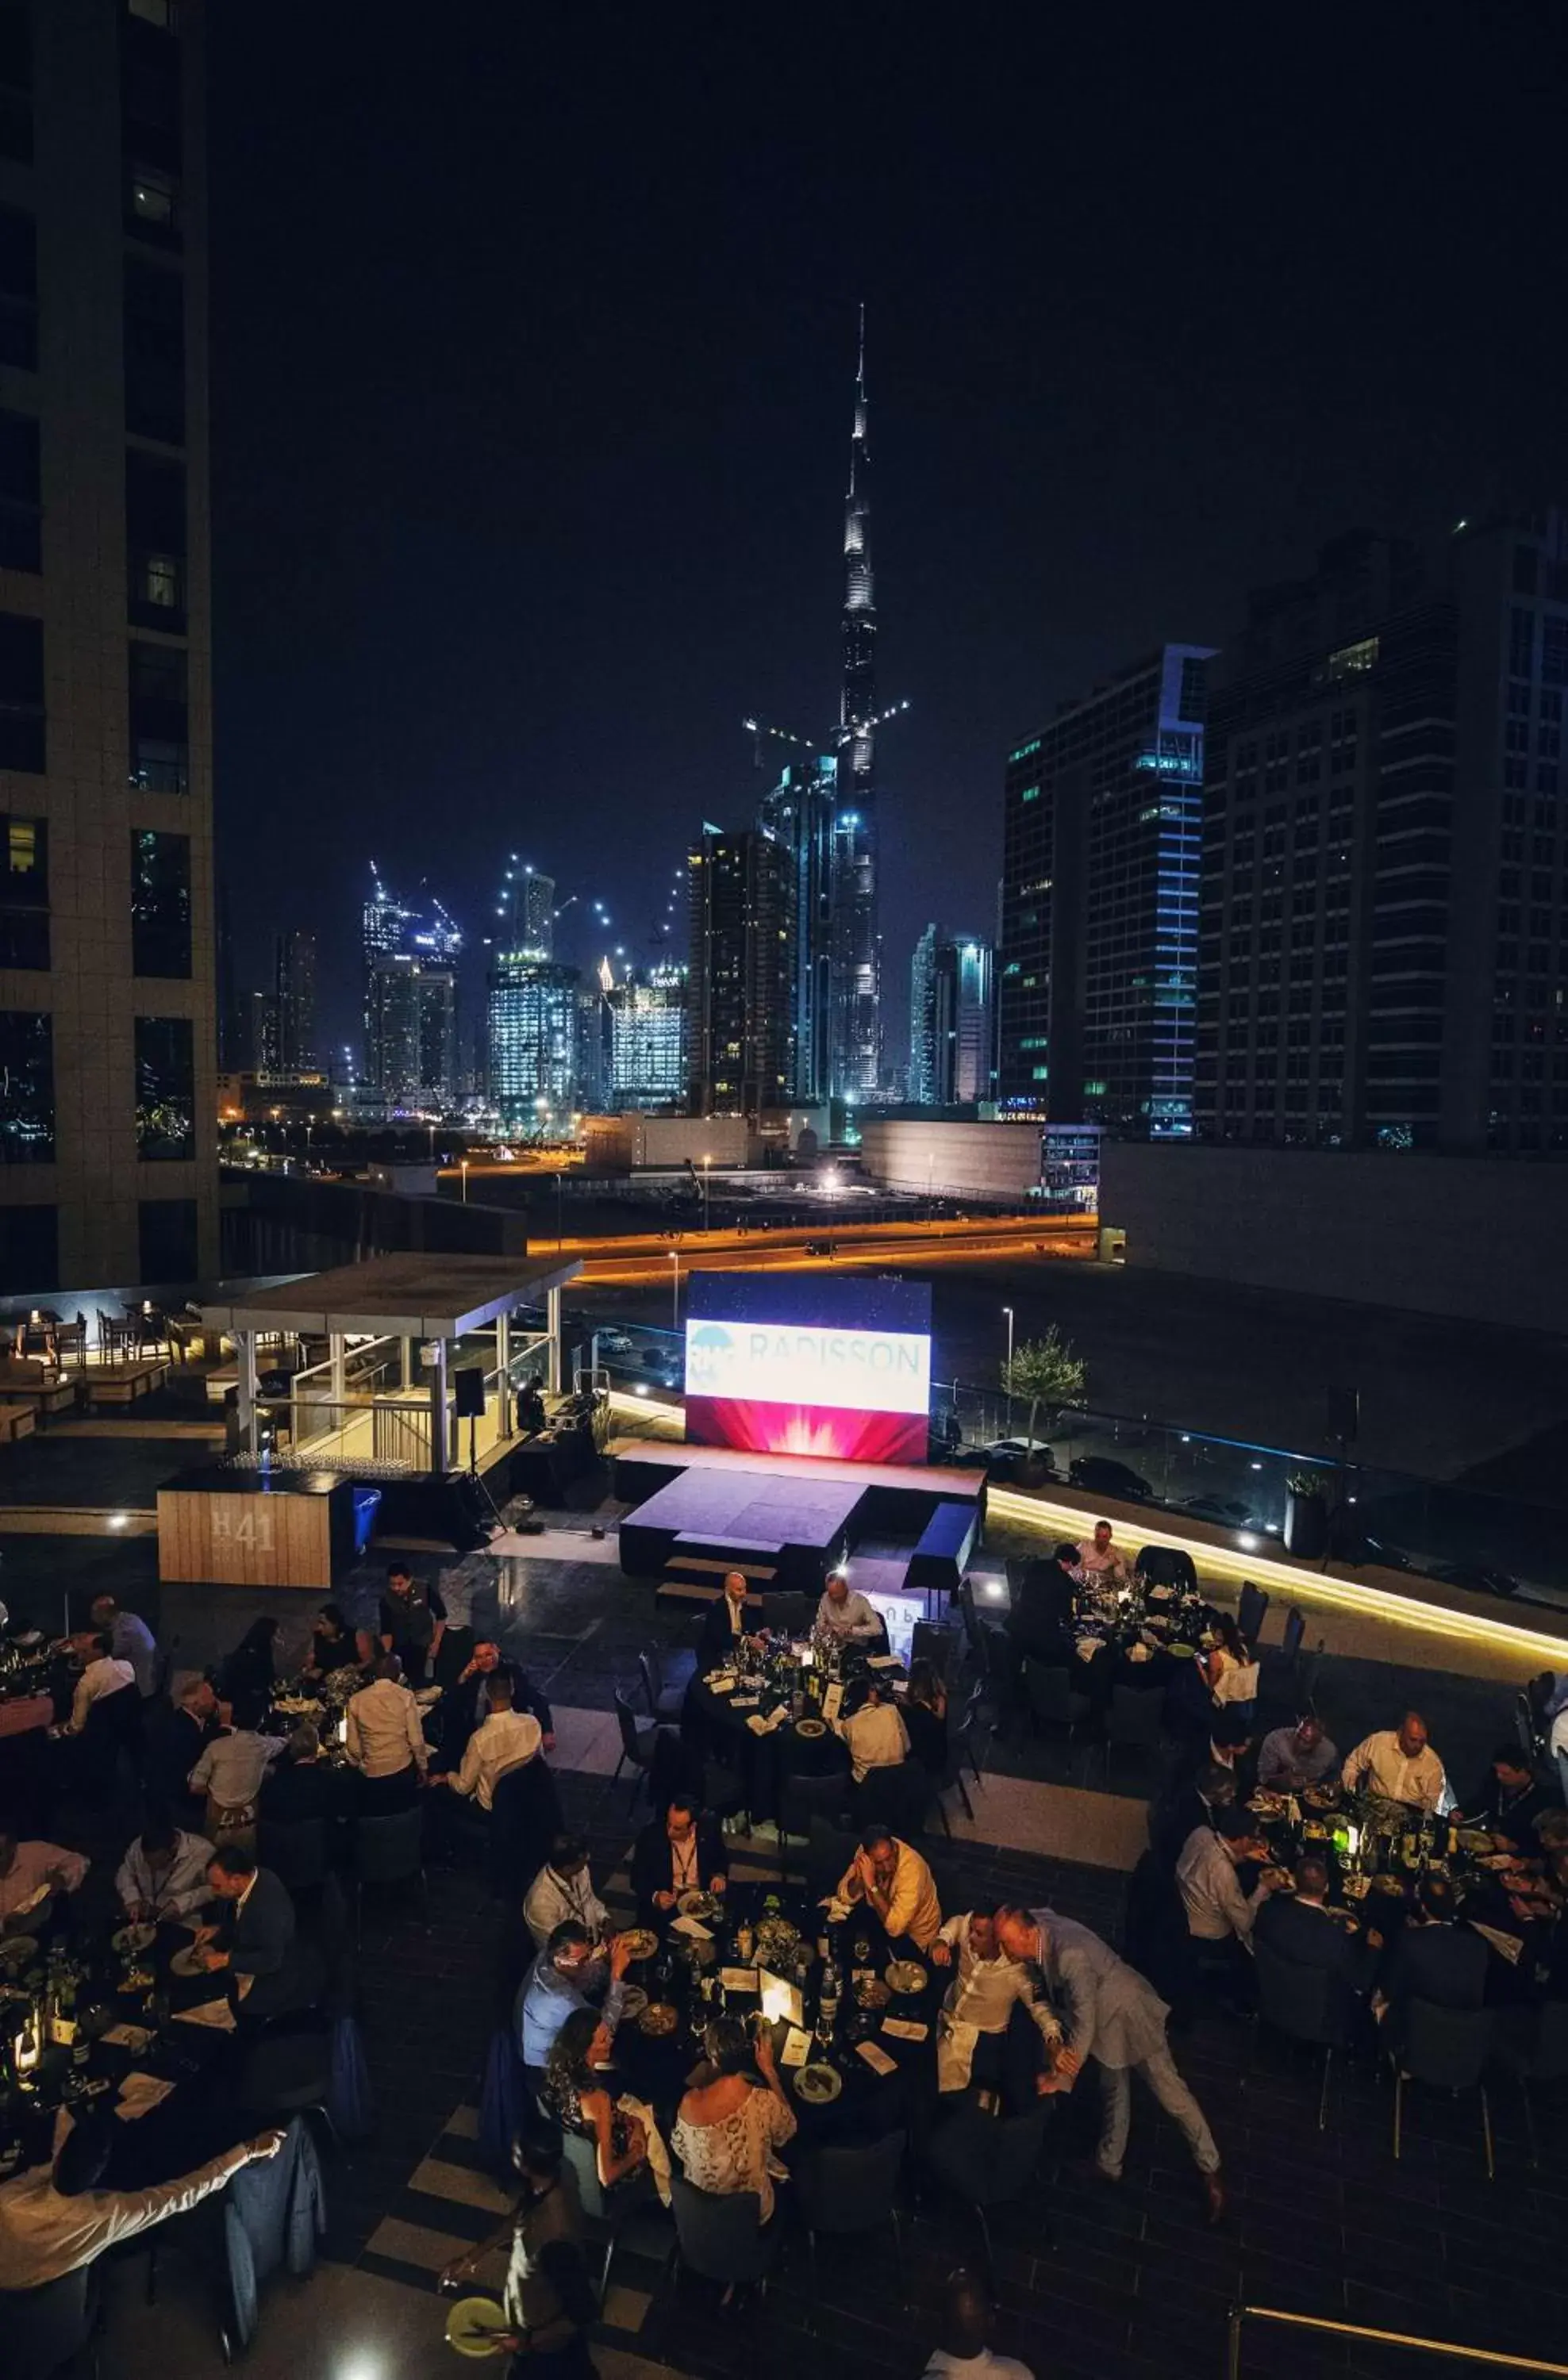 Restaurant/places to eat in Radisson Blu Hotel, Dubai Waterfront